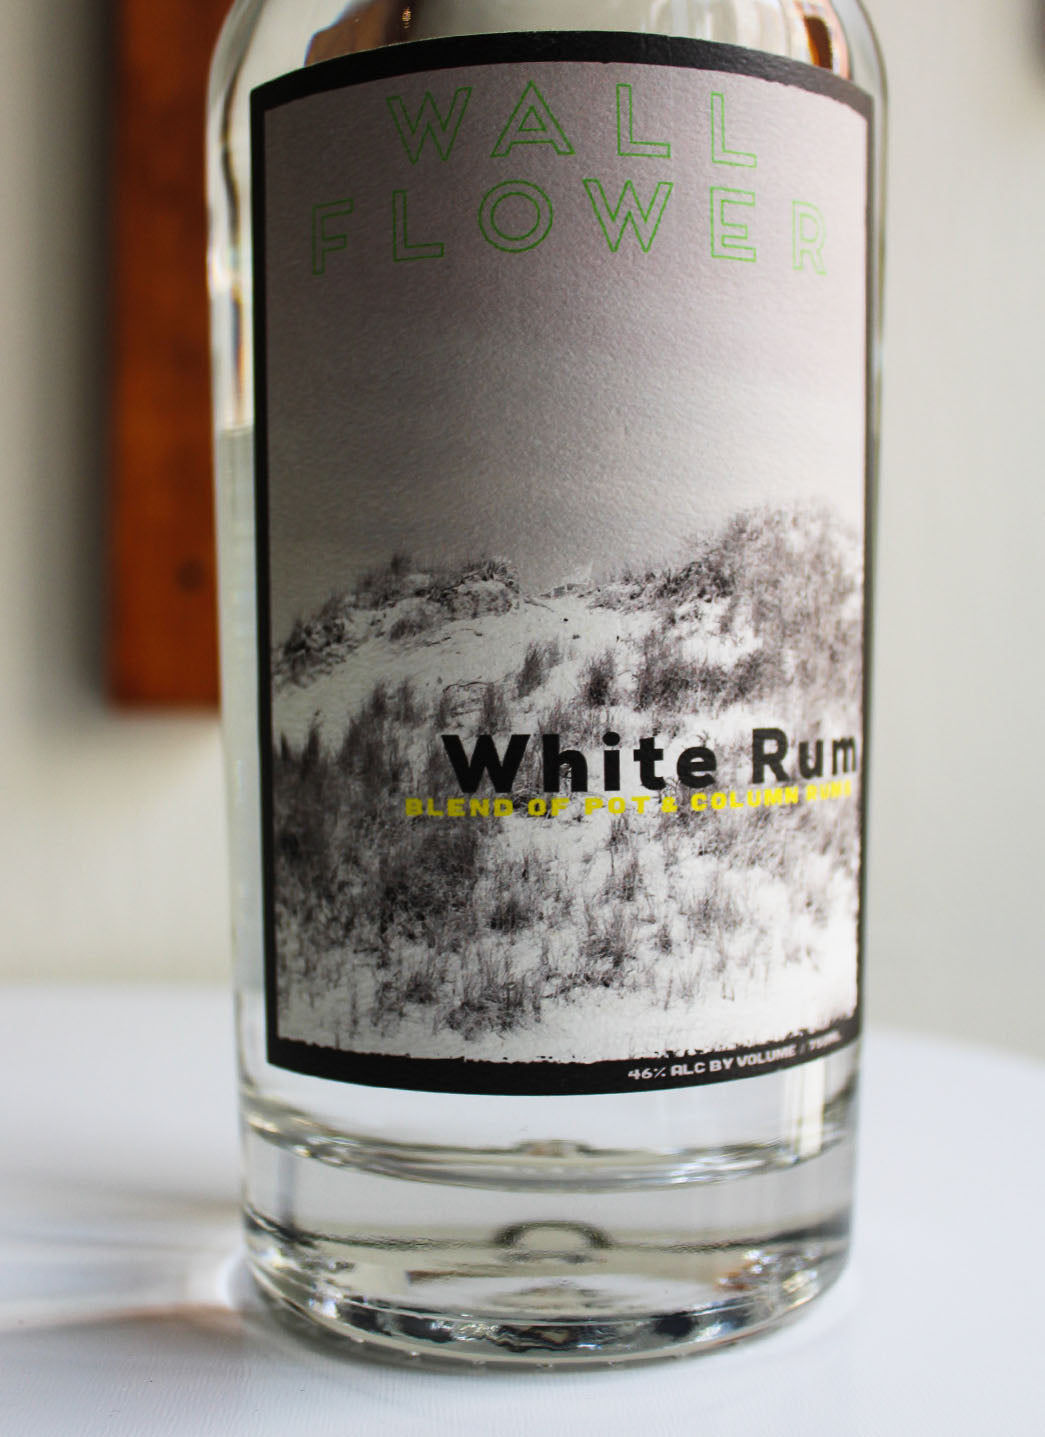 Matchbook Distilling Company Wall Flower White Rum